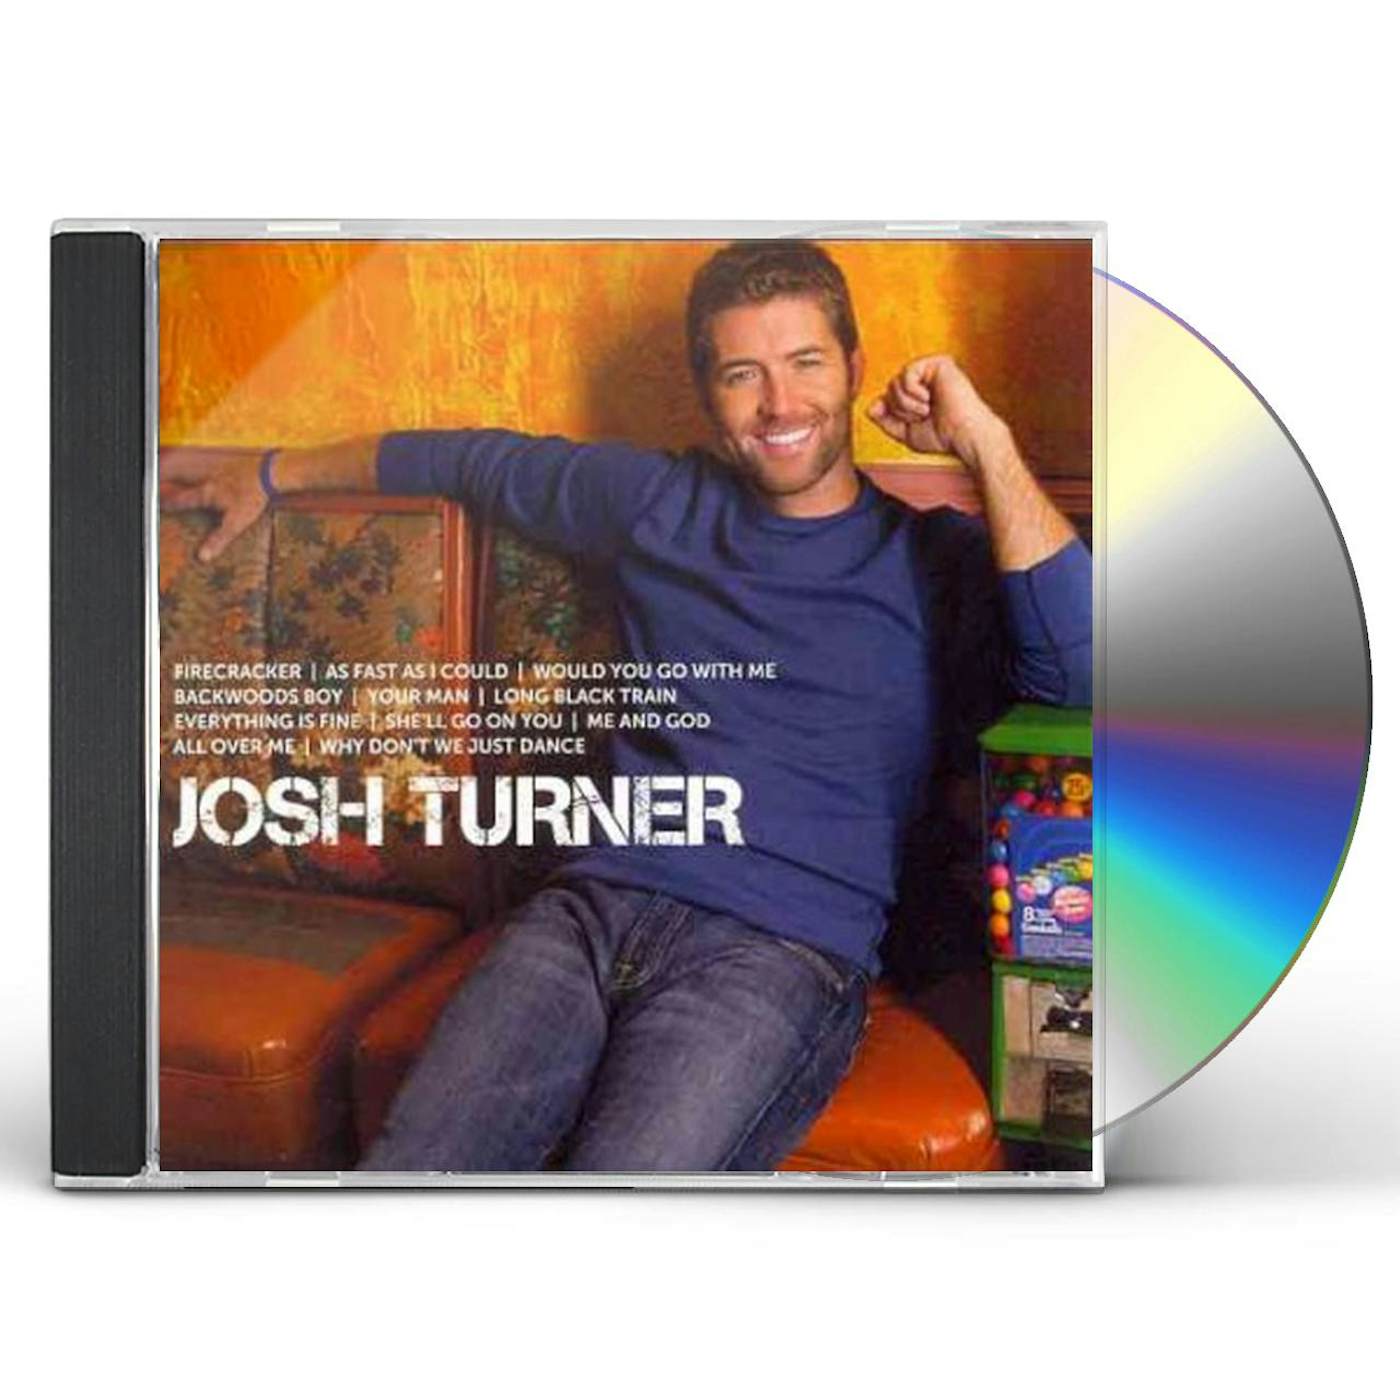 Josh Turner ICON CD